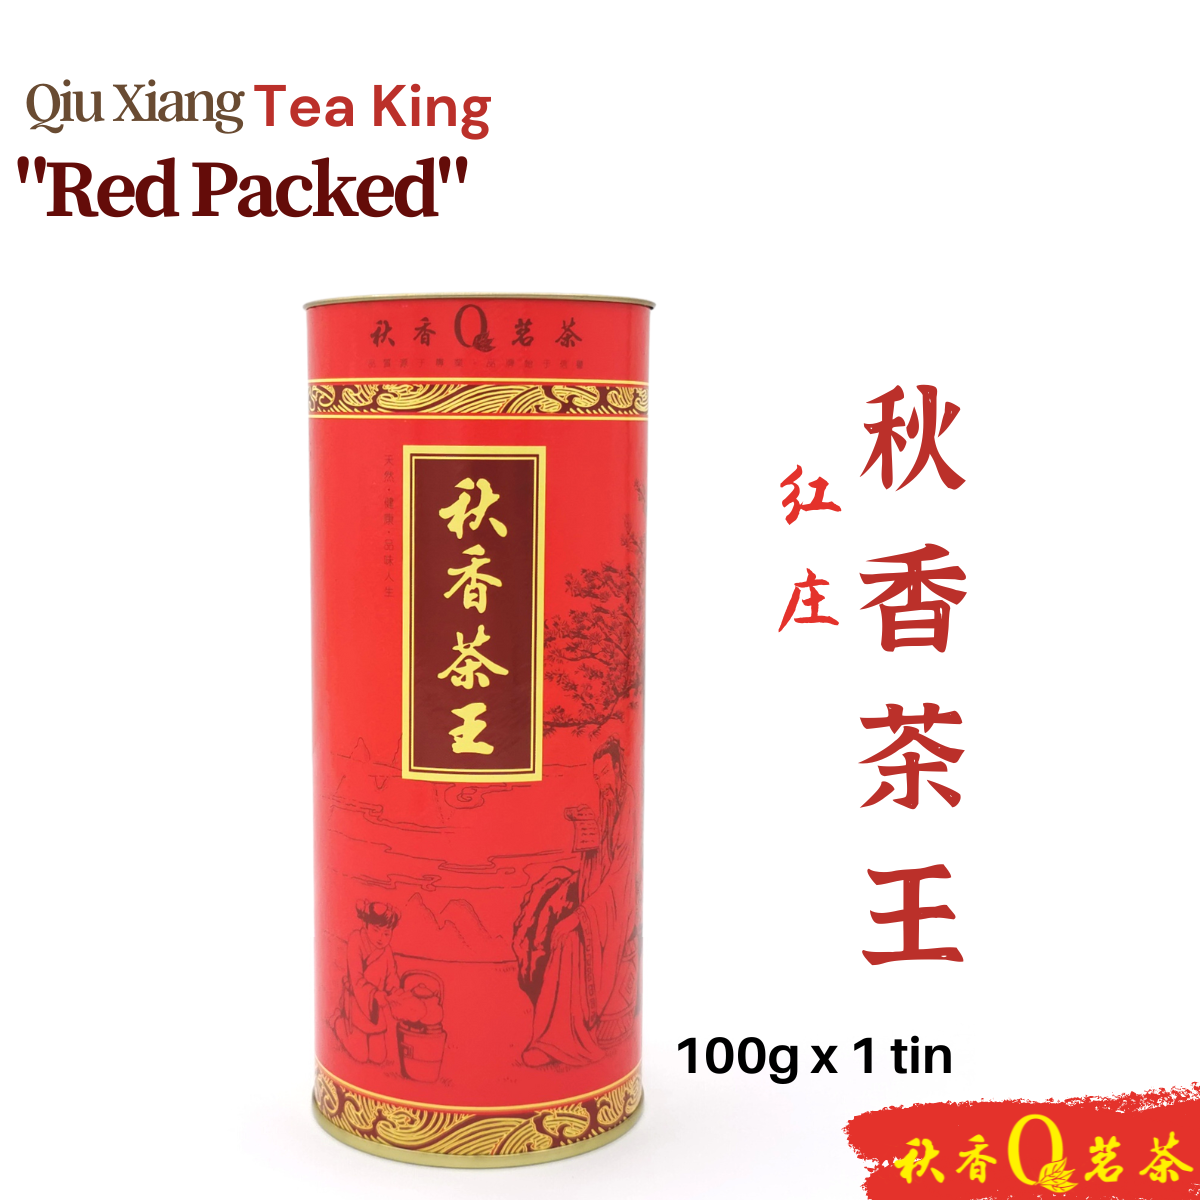 秋香茶王红庄 Qiu Xiang Tea King "Red Pack" 【100g】|【乌龙茶 Oolong Tea】